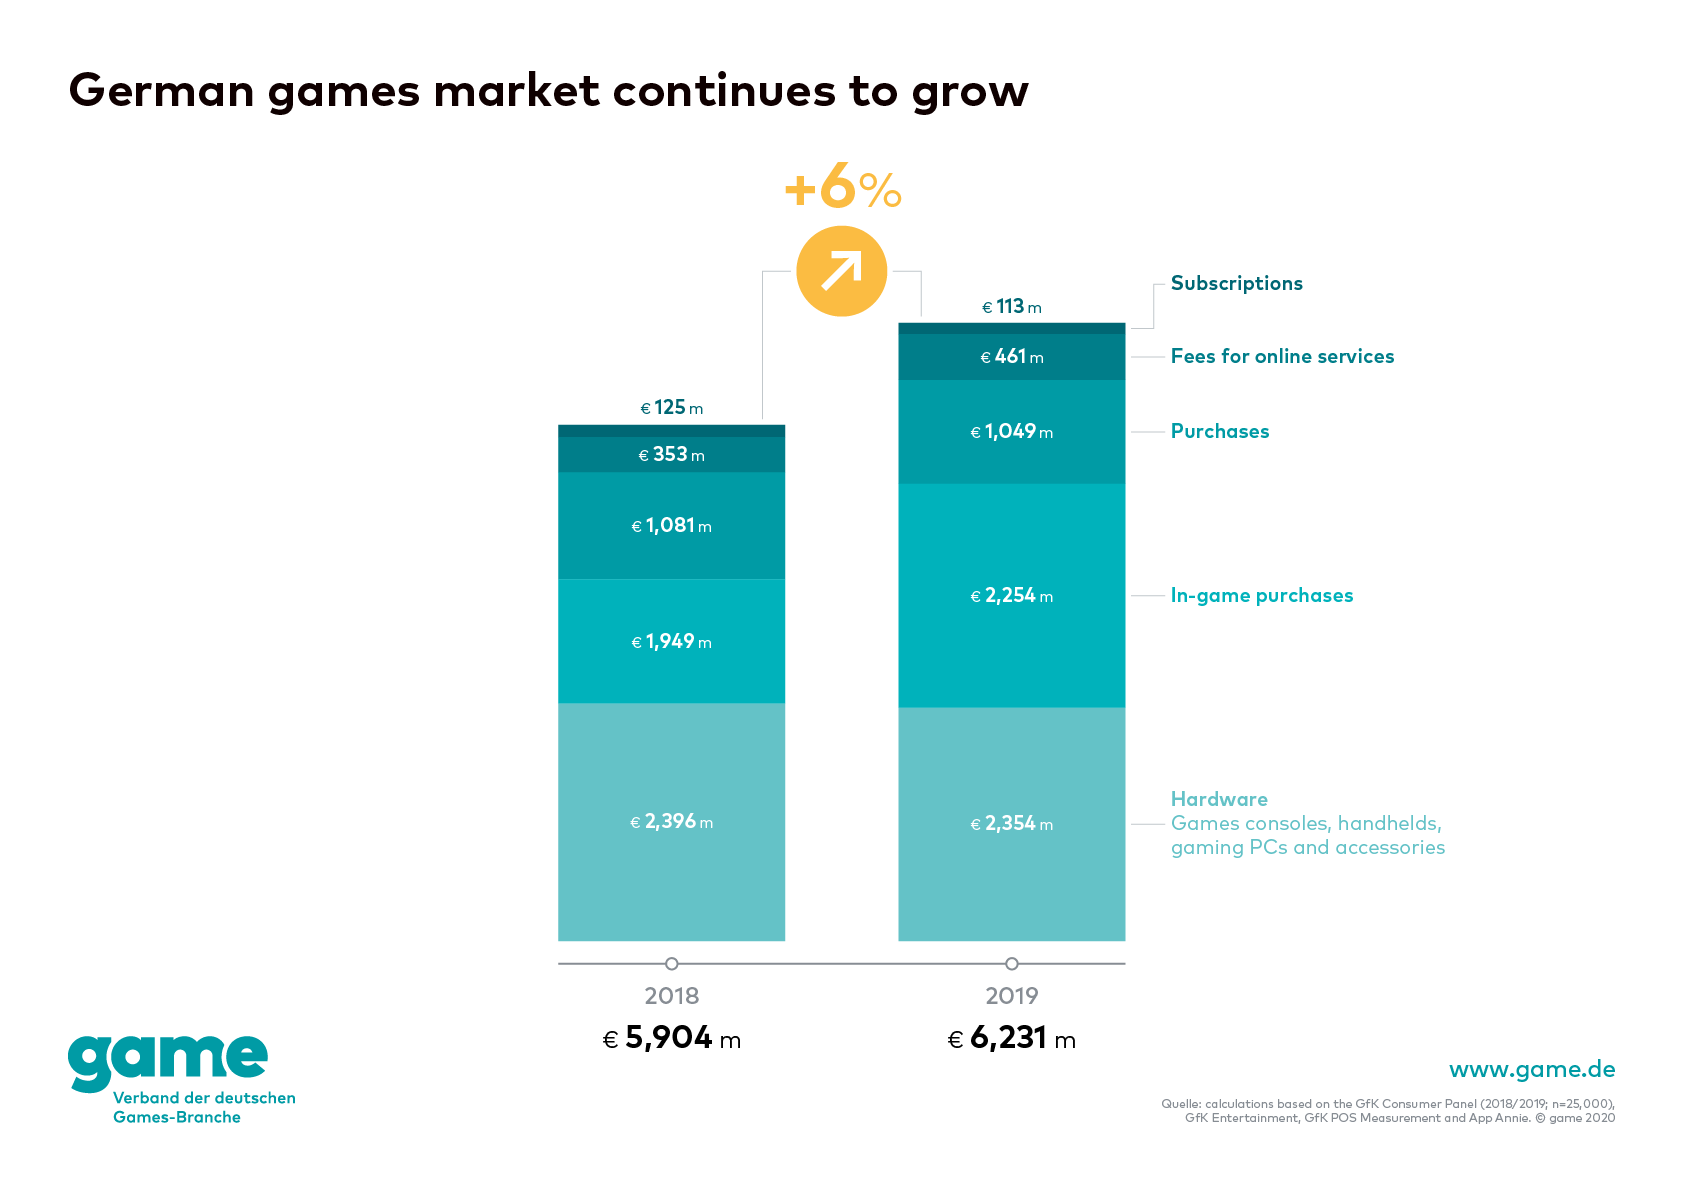 German games market 2019